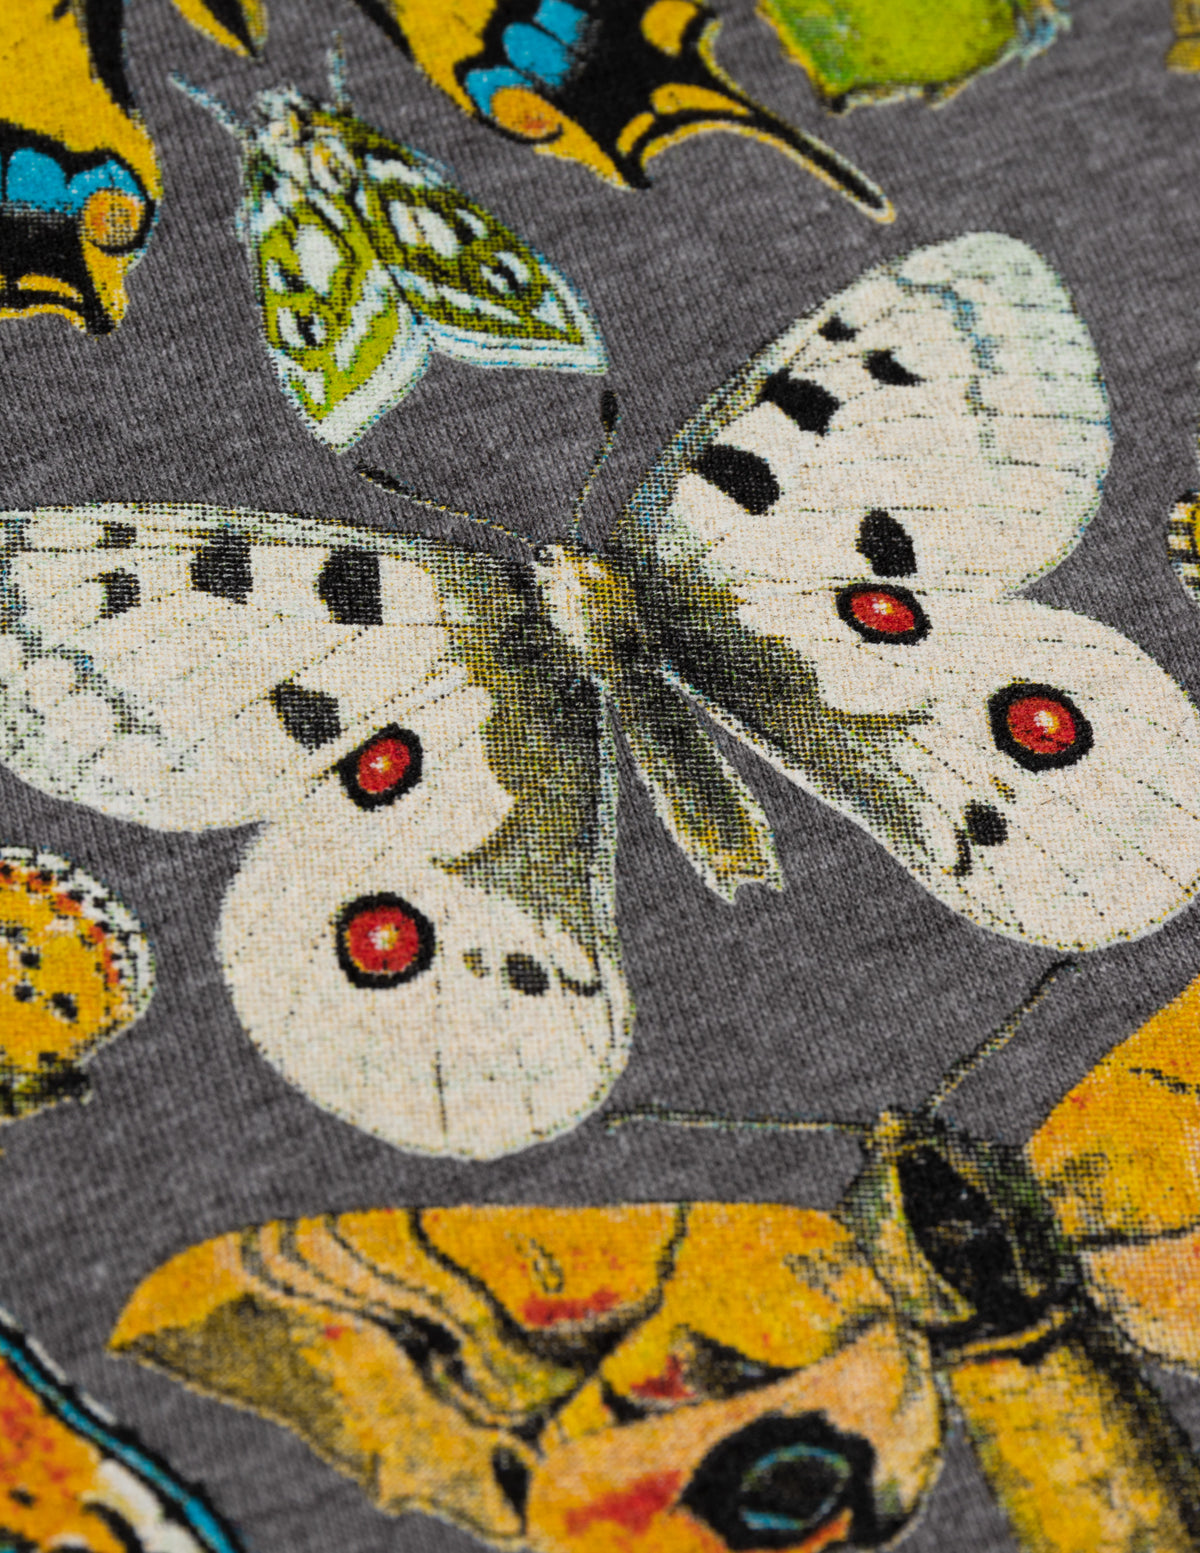 Vintage Butterfly Art | Cool Nature Illustration Butterflies V-Neck T-Shirt for Women